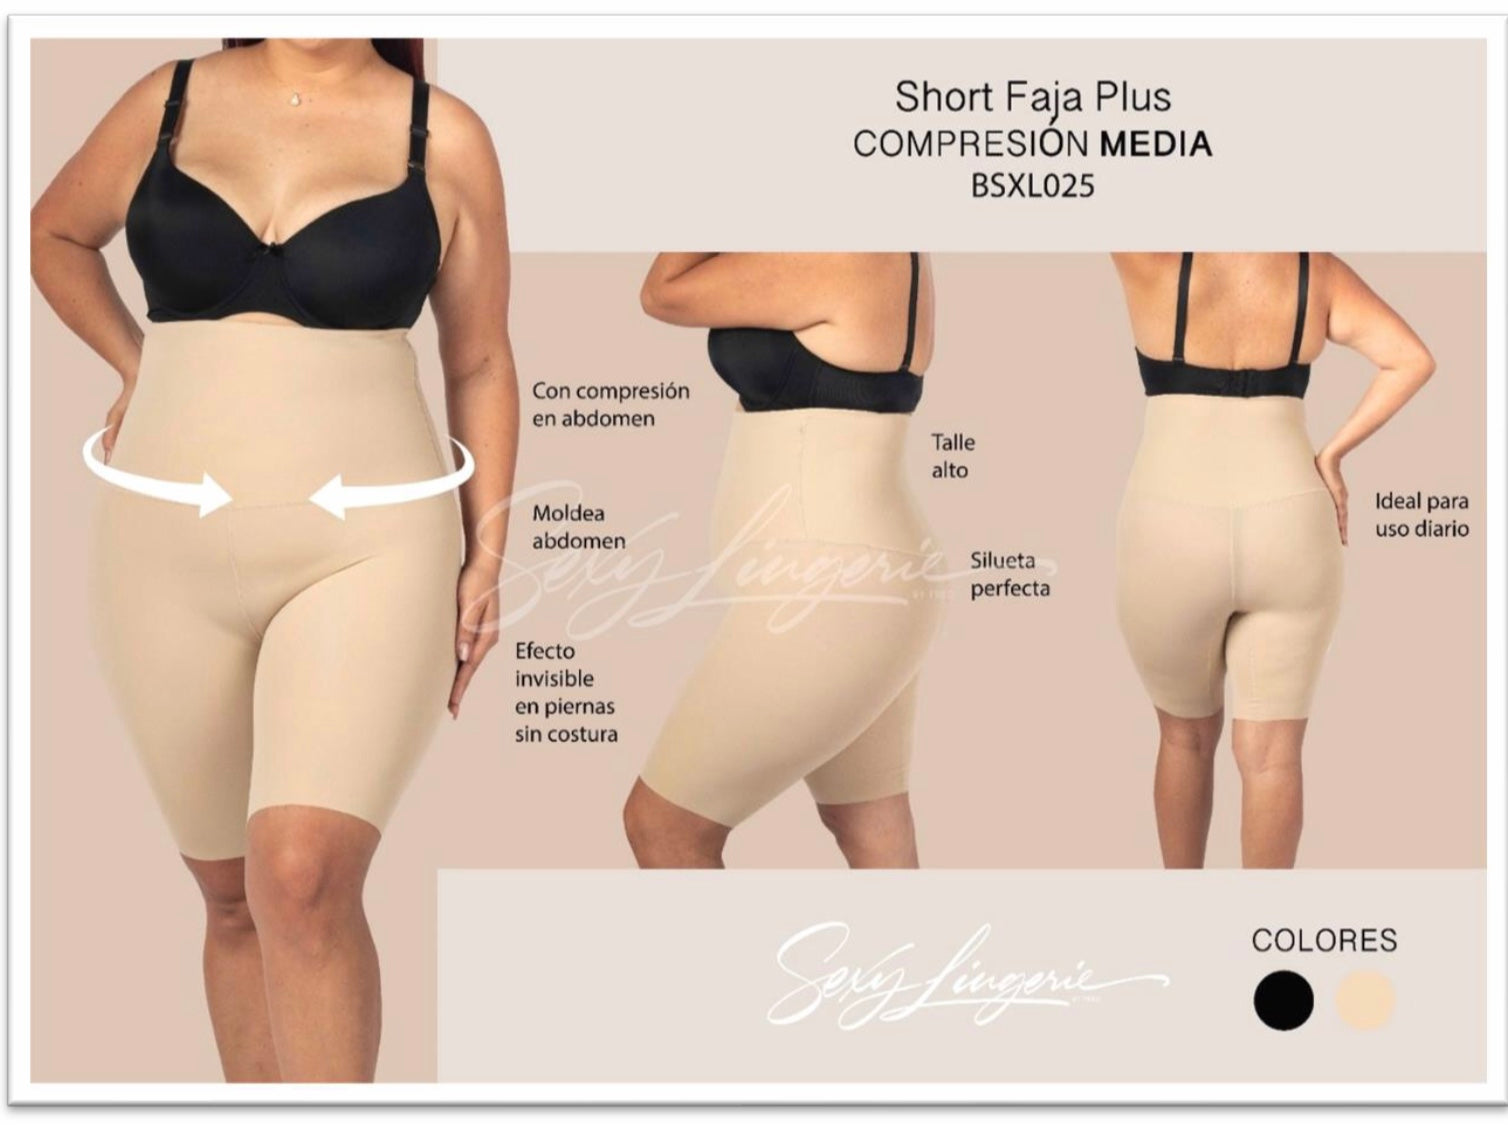 Columbian Panty Faja-Adjustable Smart Compression Shape Contouring Fabric